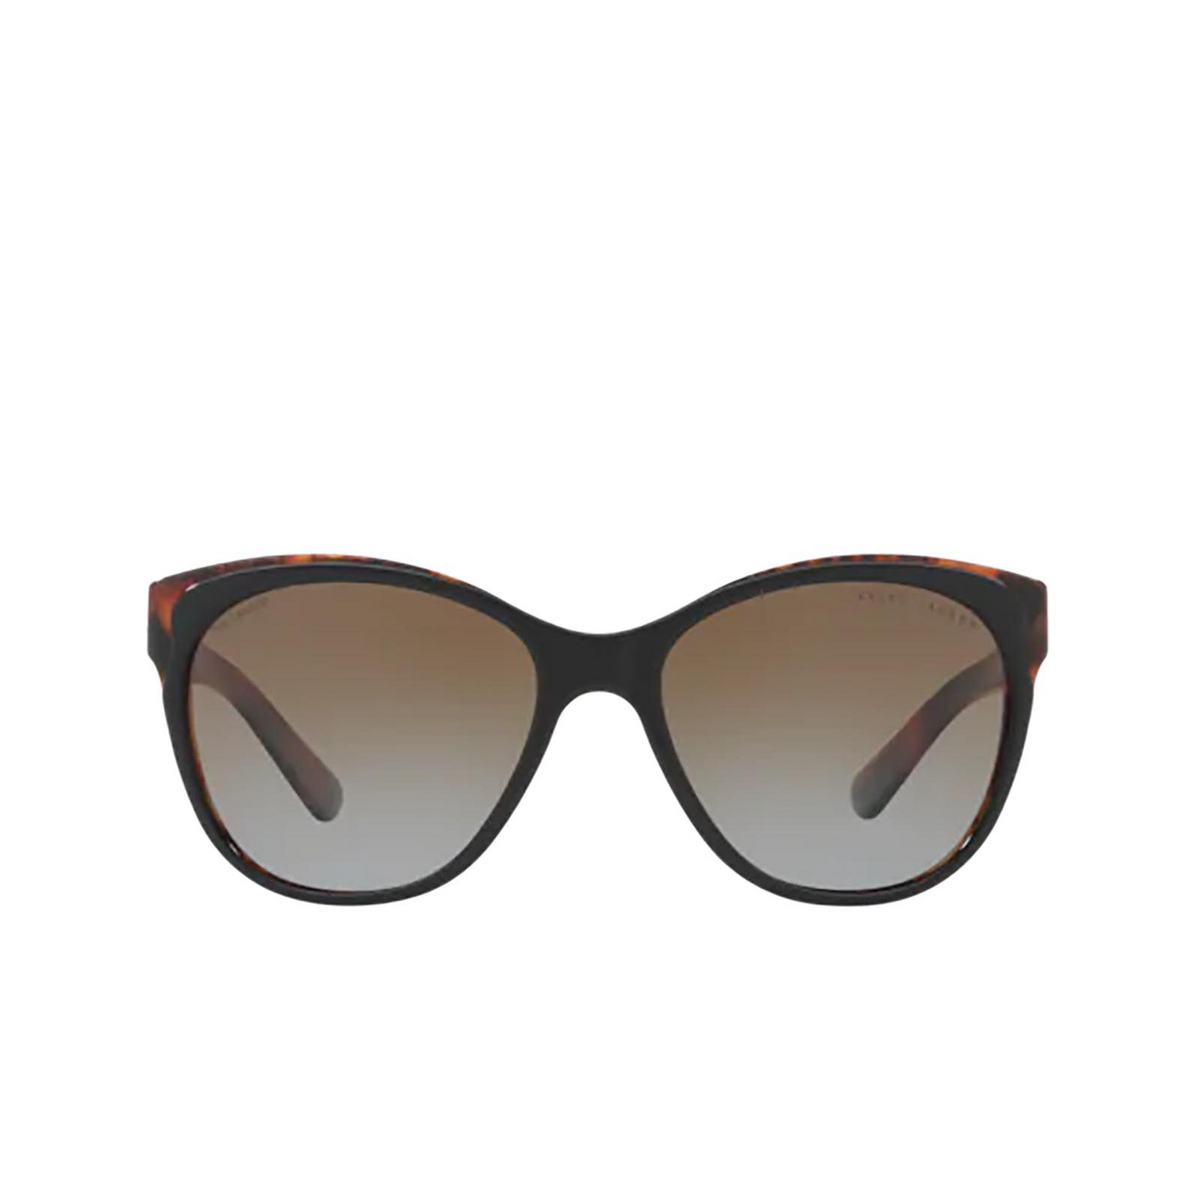 Ralph Lauren RL8156 Sunglasses 5260T5 Shiny Black On Jerry Havana - front view